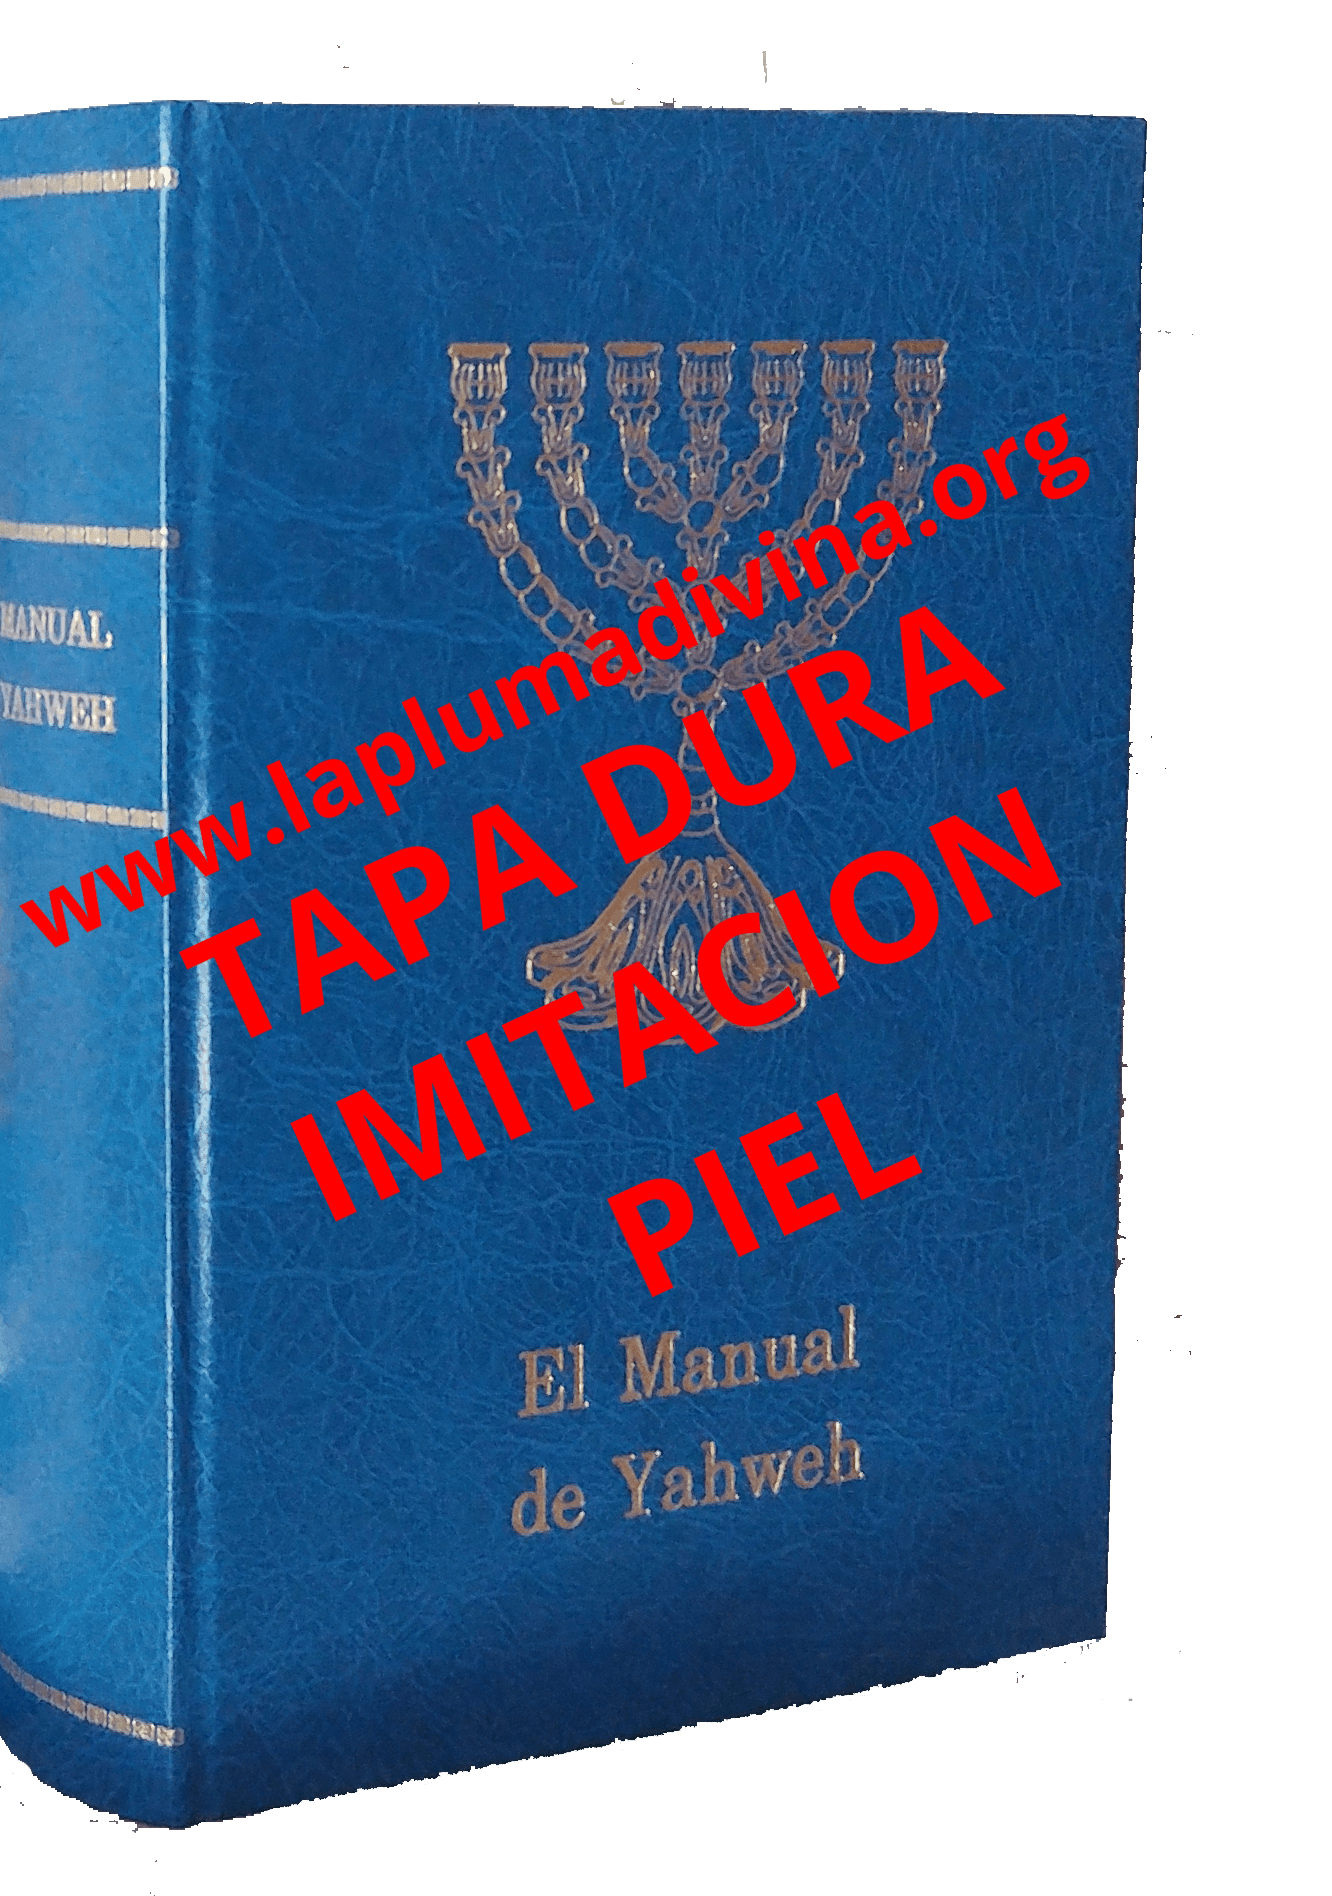 El Manual de Yahweh - Miguel Atalaya - #LaPlumaDivina